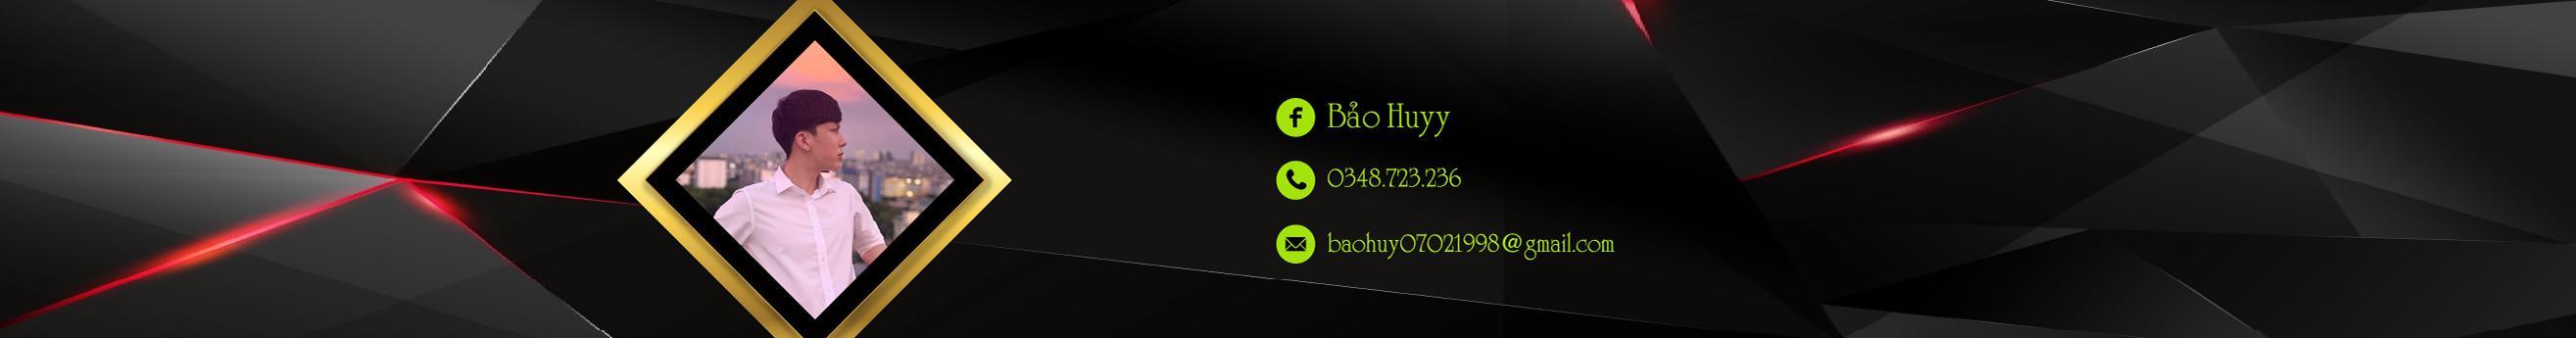 Bảo Huyy's profile banner